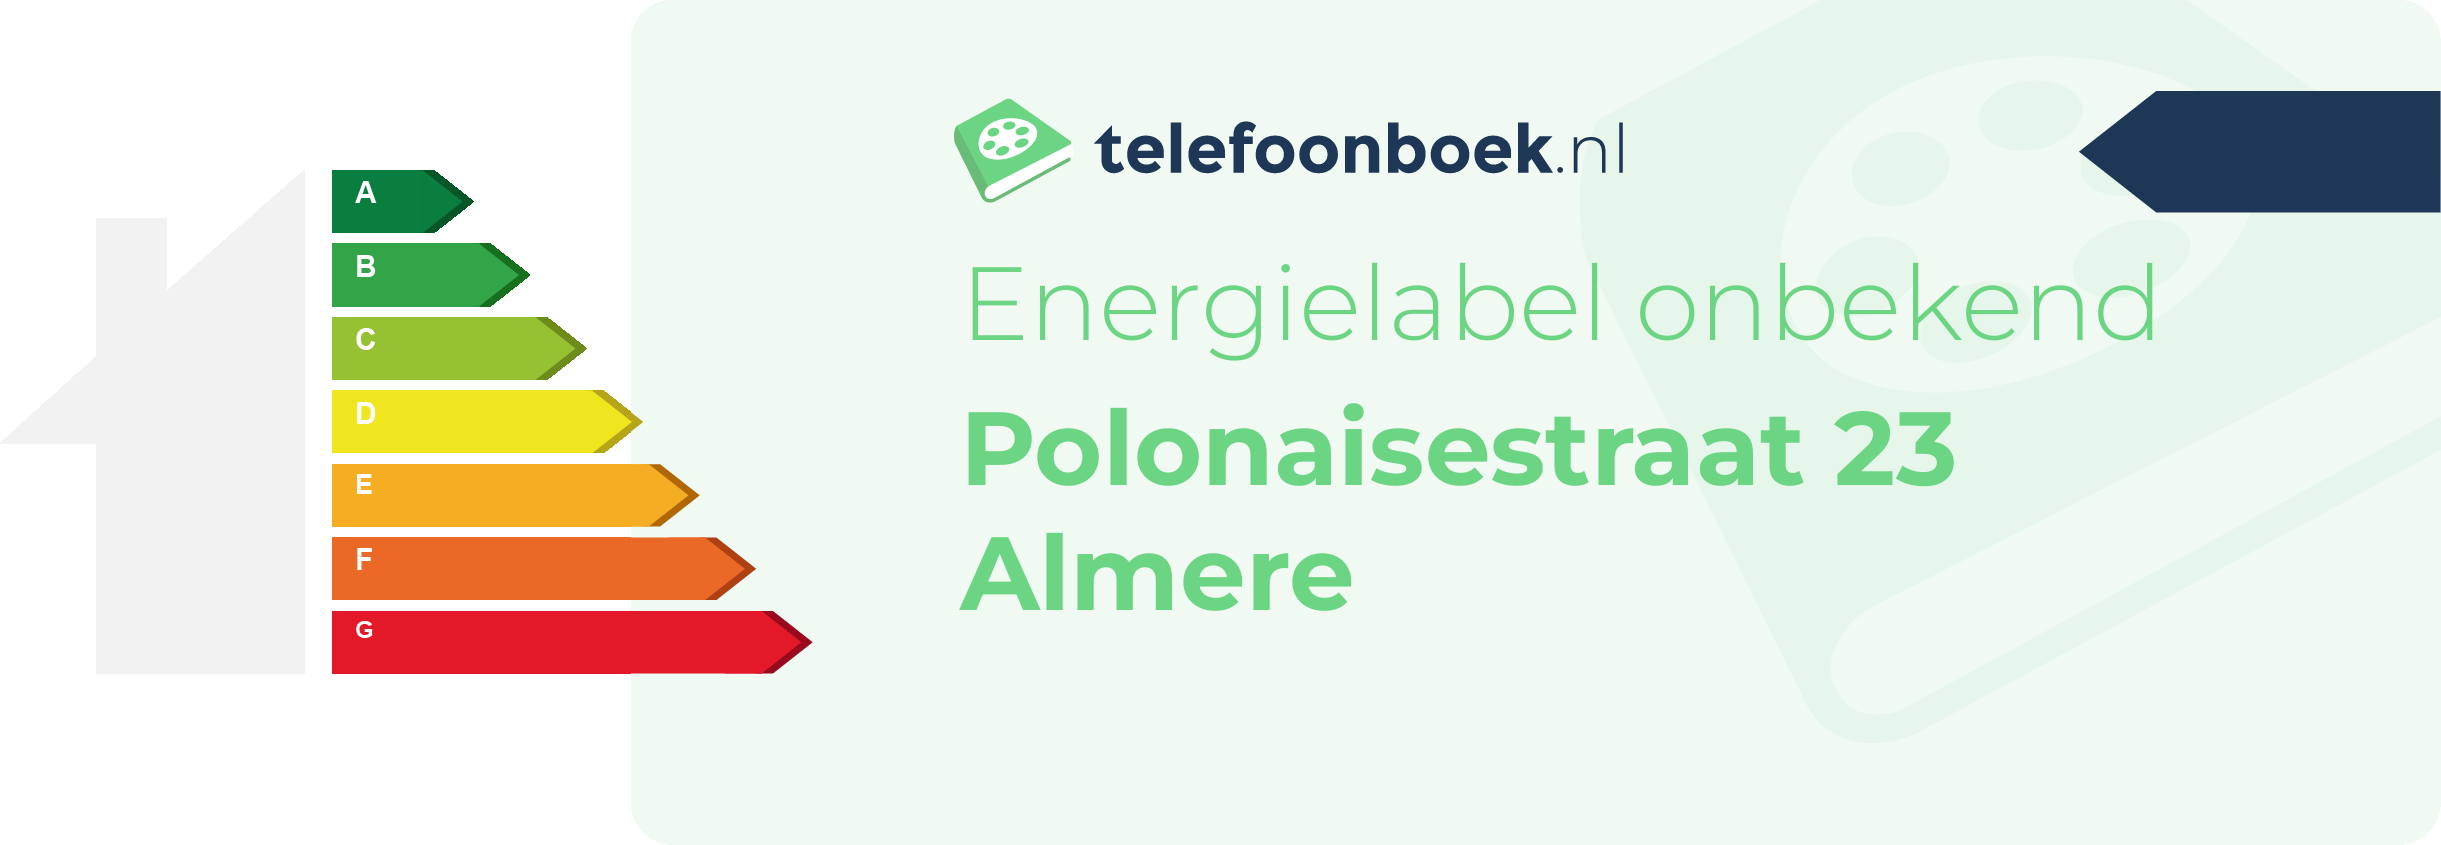 Energielabel Polonaisestraat 23 Almere